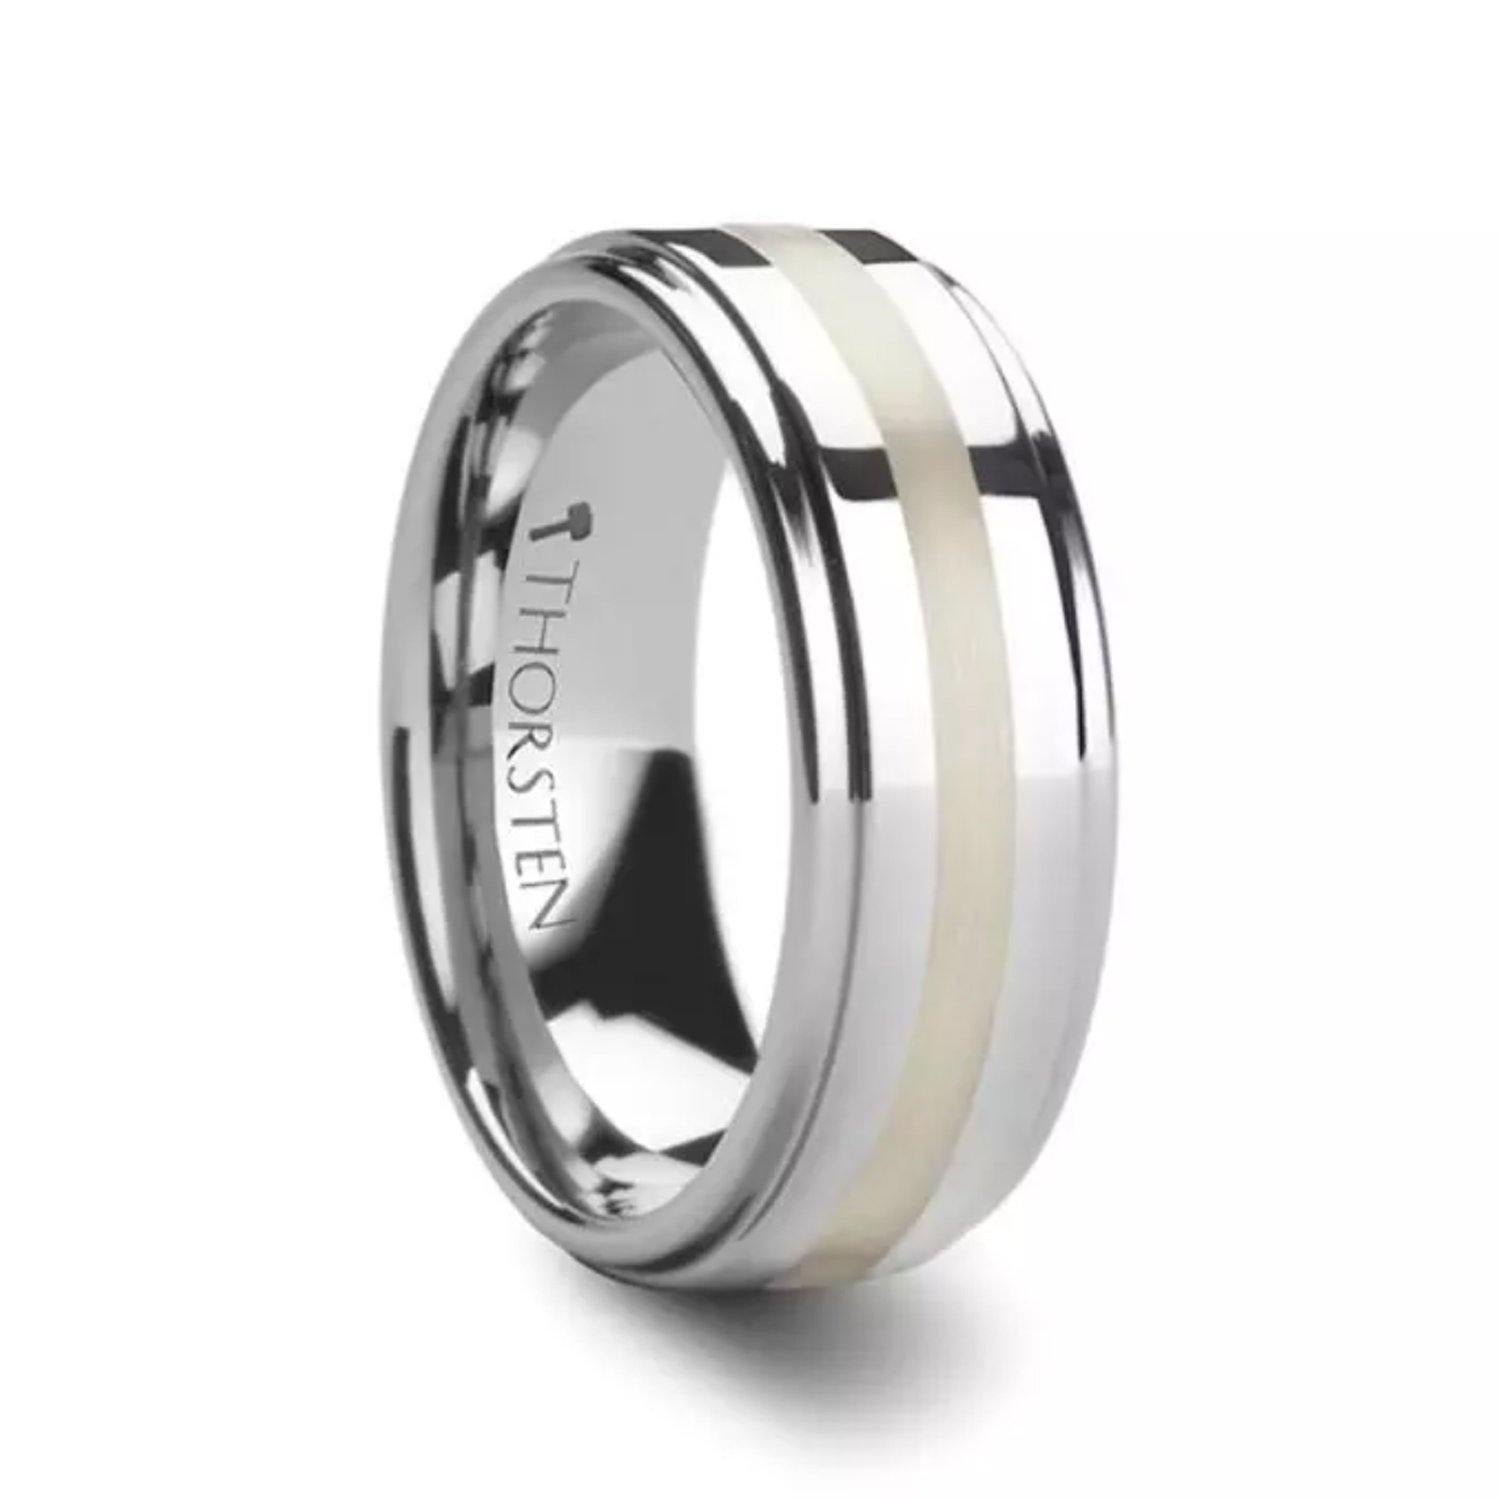 LOKI - Silver Inlaid Raised Center Tungsten Carbide Ring - 8mm - The Rutile Ltd